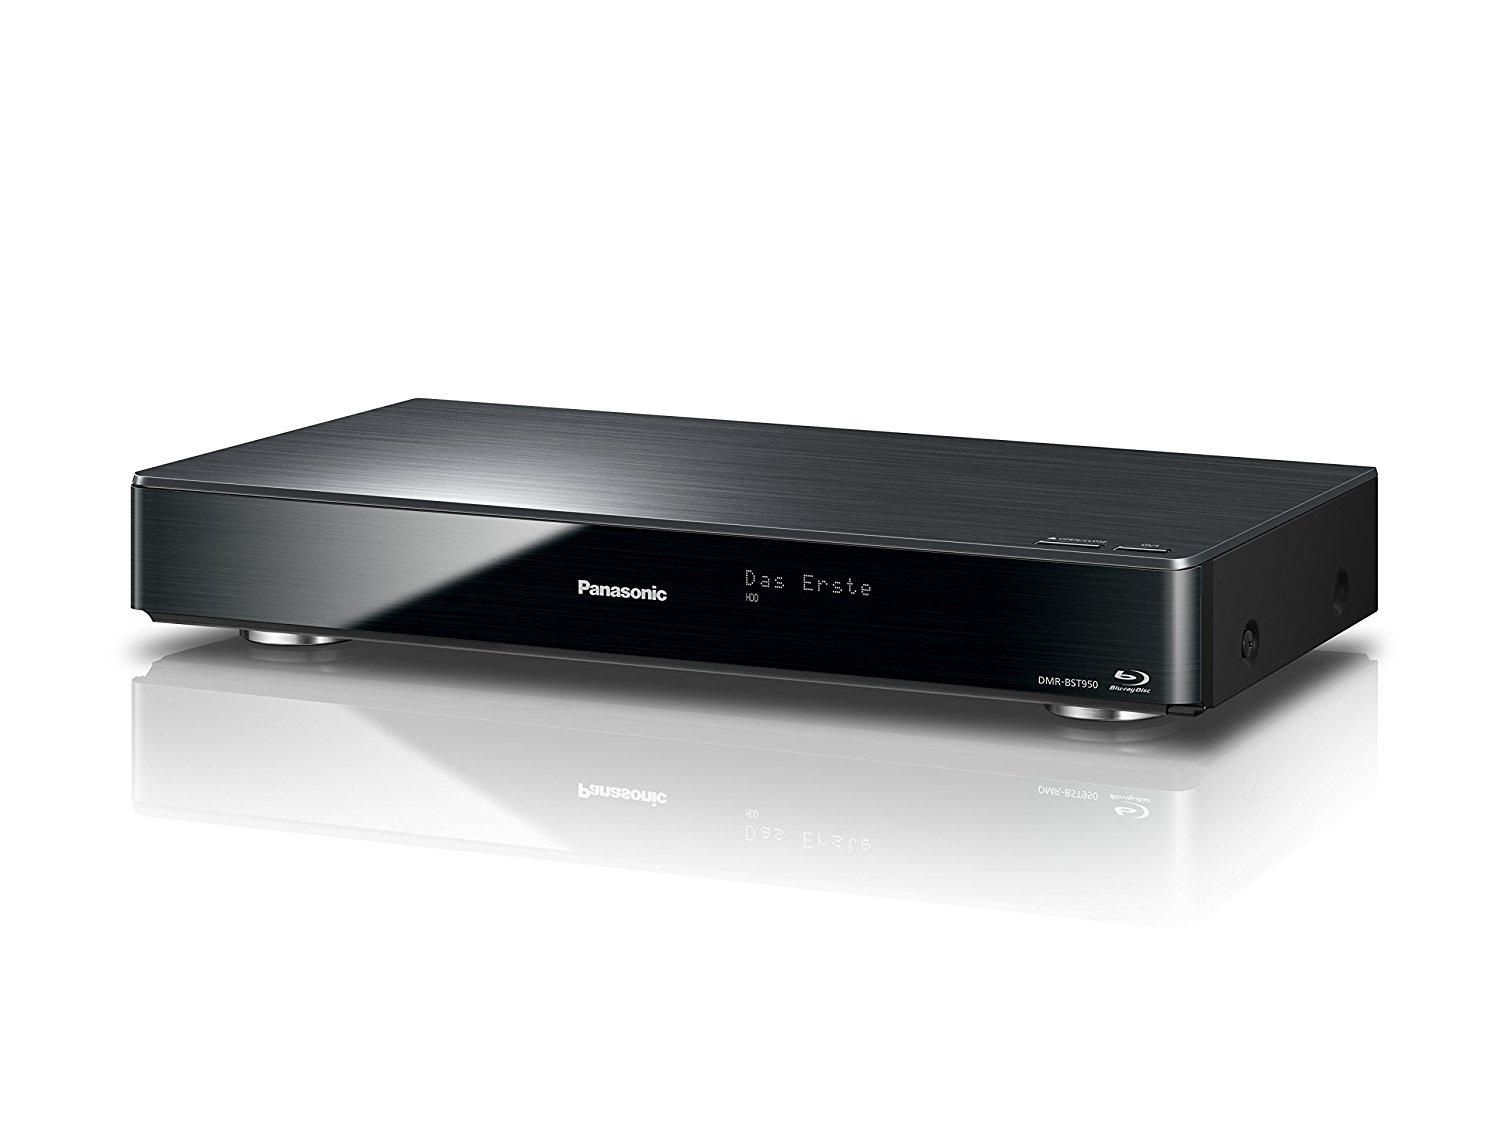 Panasonic DMR-BST950 Blu-ray Recorder (2TB) - Schwarz